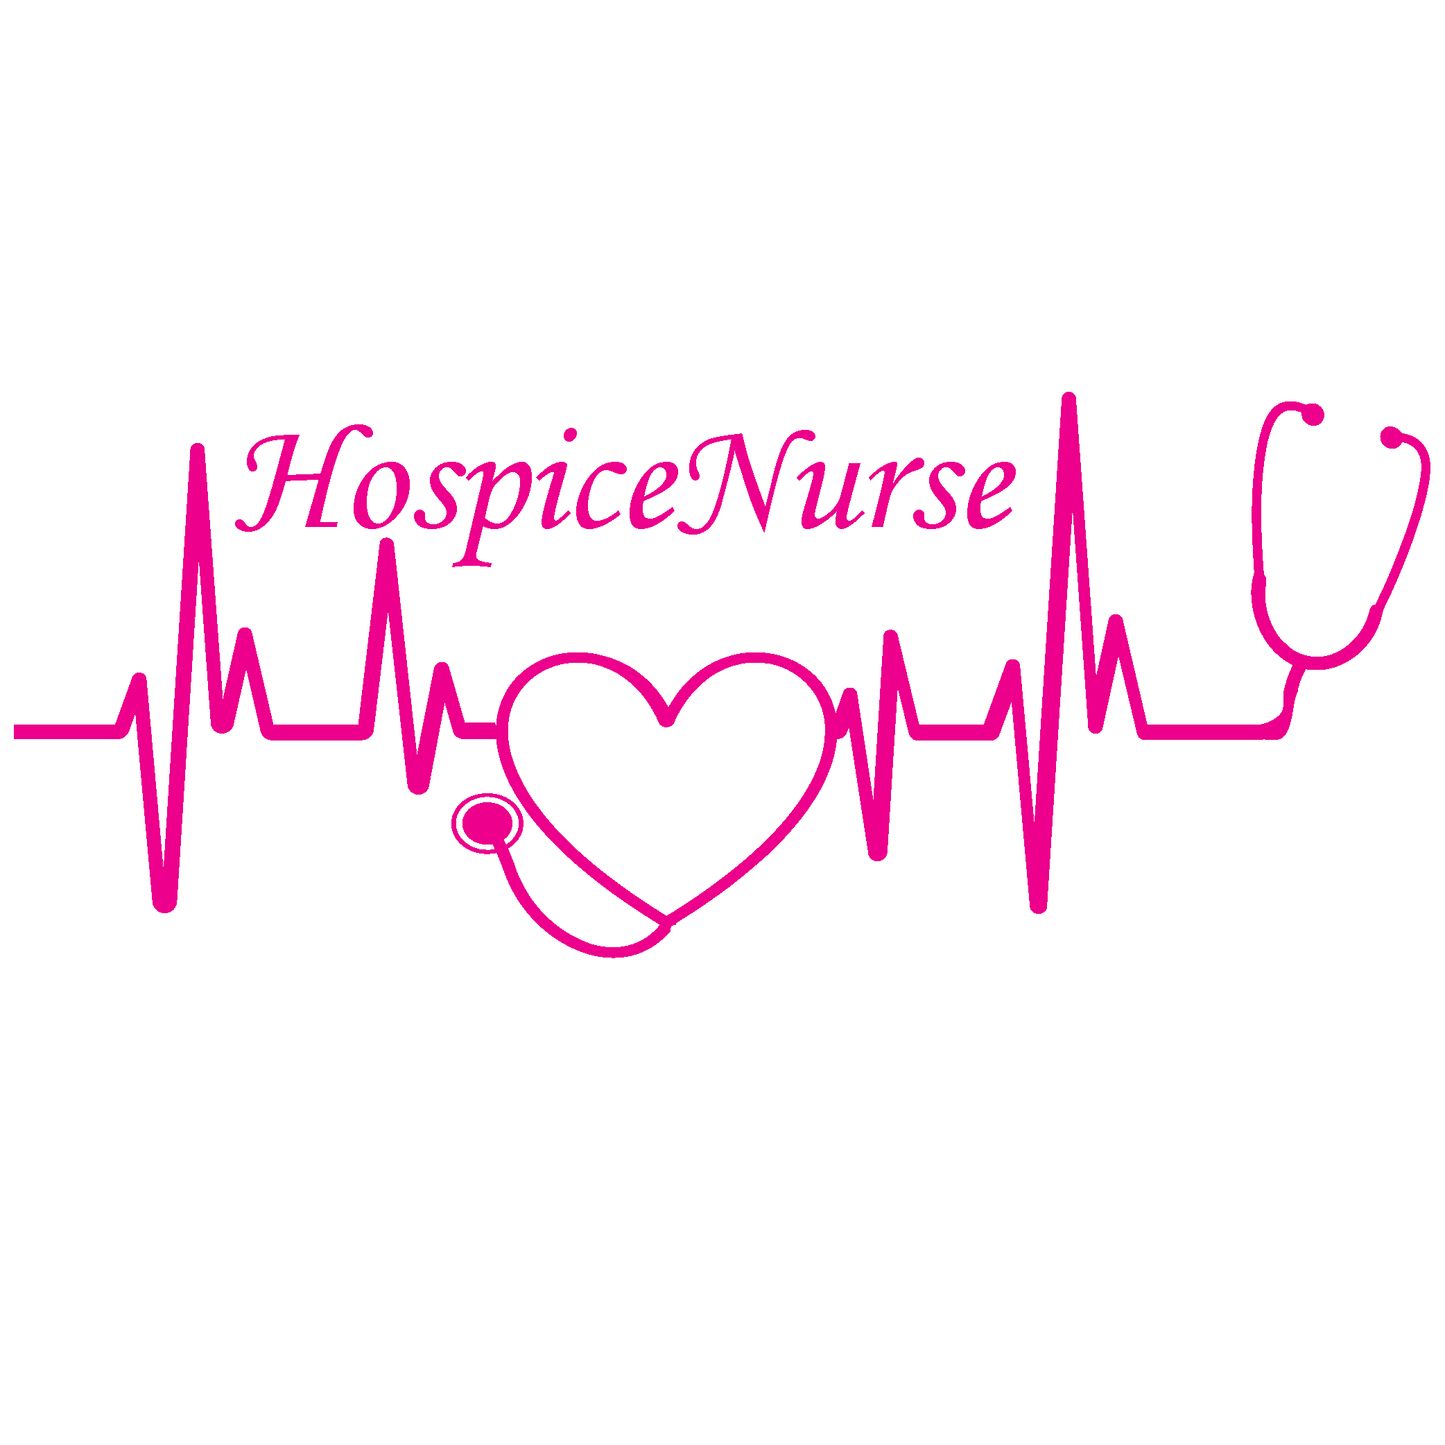 ShopVinylDesignStore.com Heartbeat Hospice Nurse Wide Shop Vinyl Design decals stickers